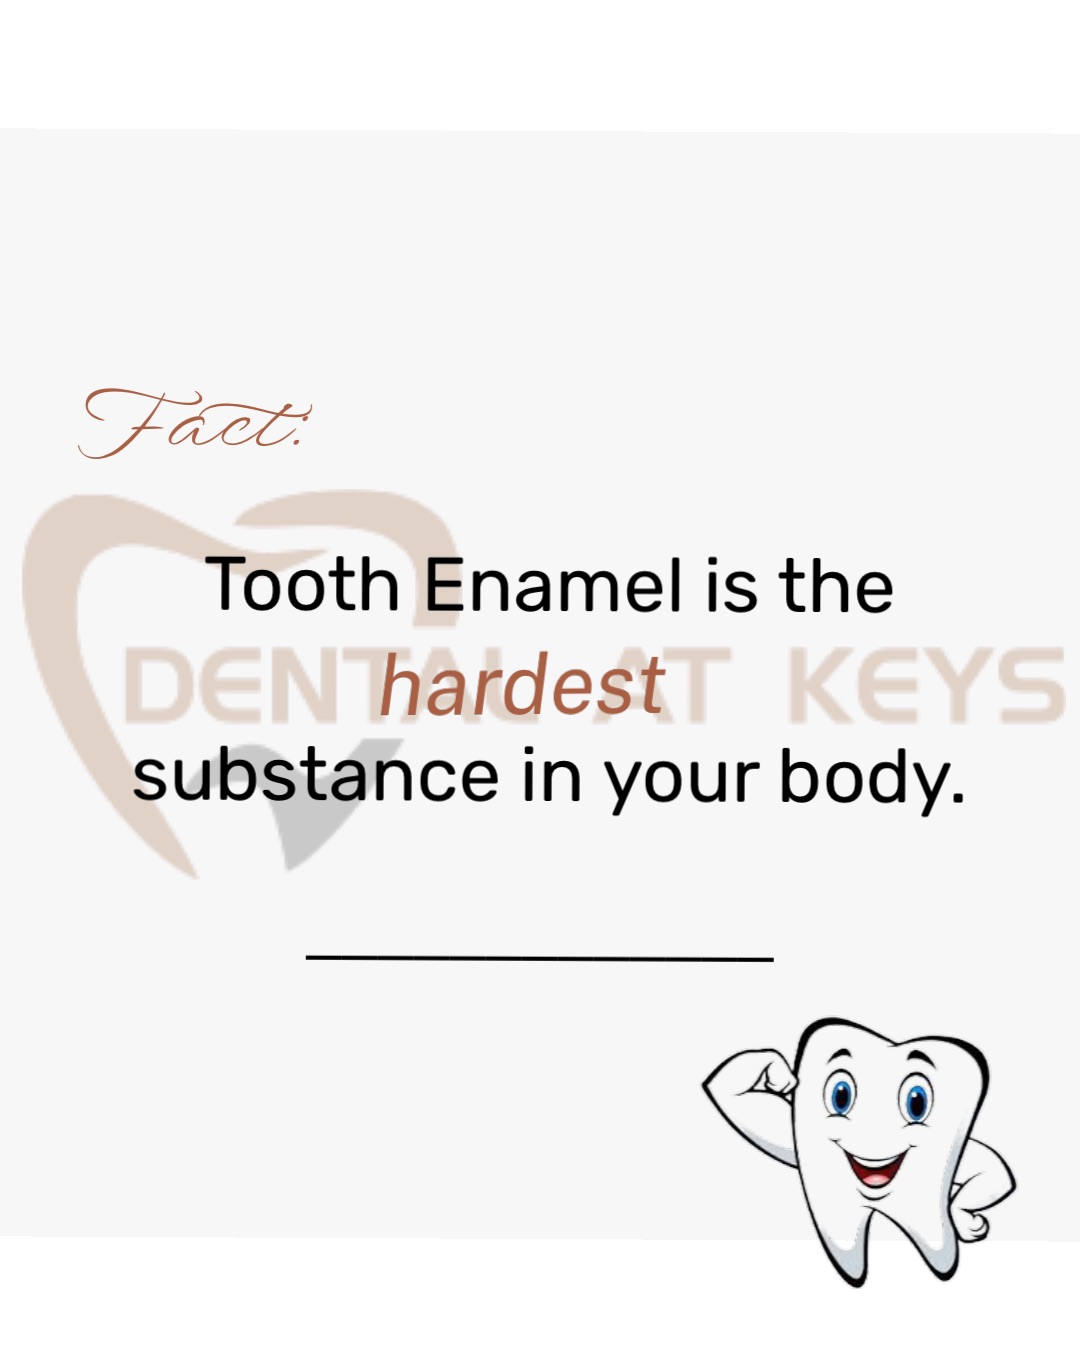 Fun Dental Fact